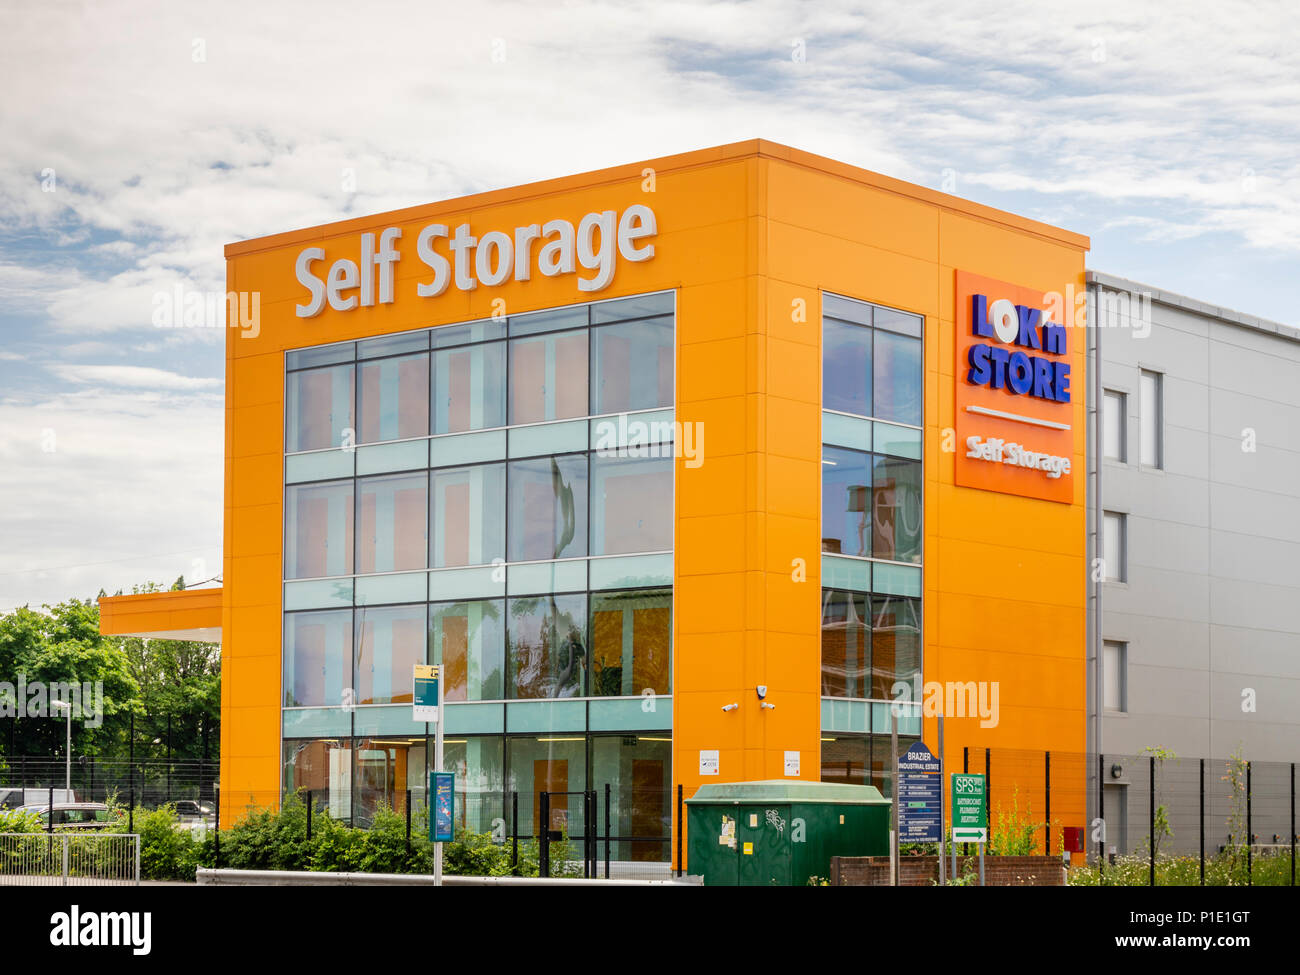 Orange coloured building facade of a Loknstore self age unit in Southampton, England, UK Stock Photo